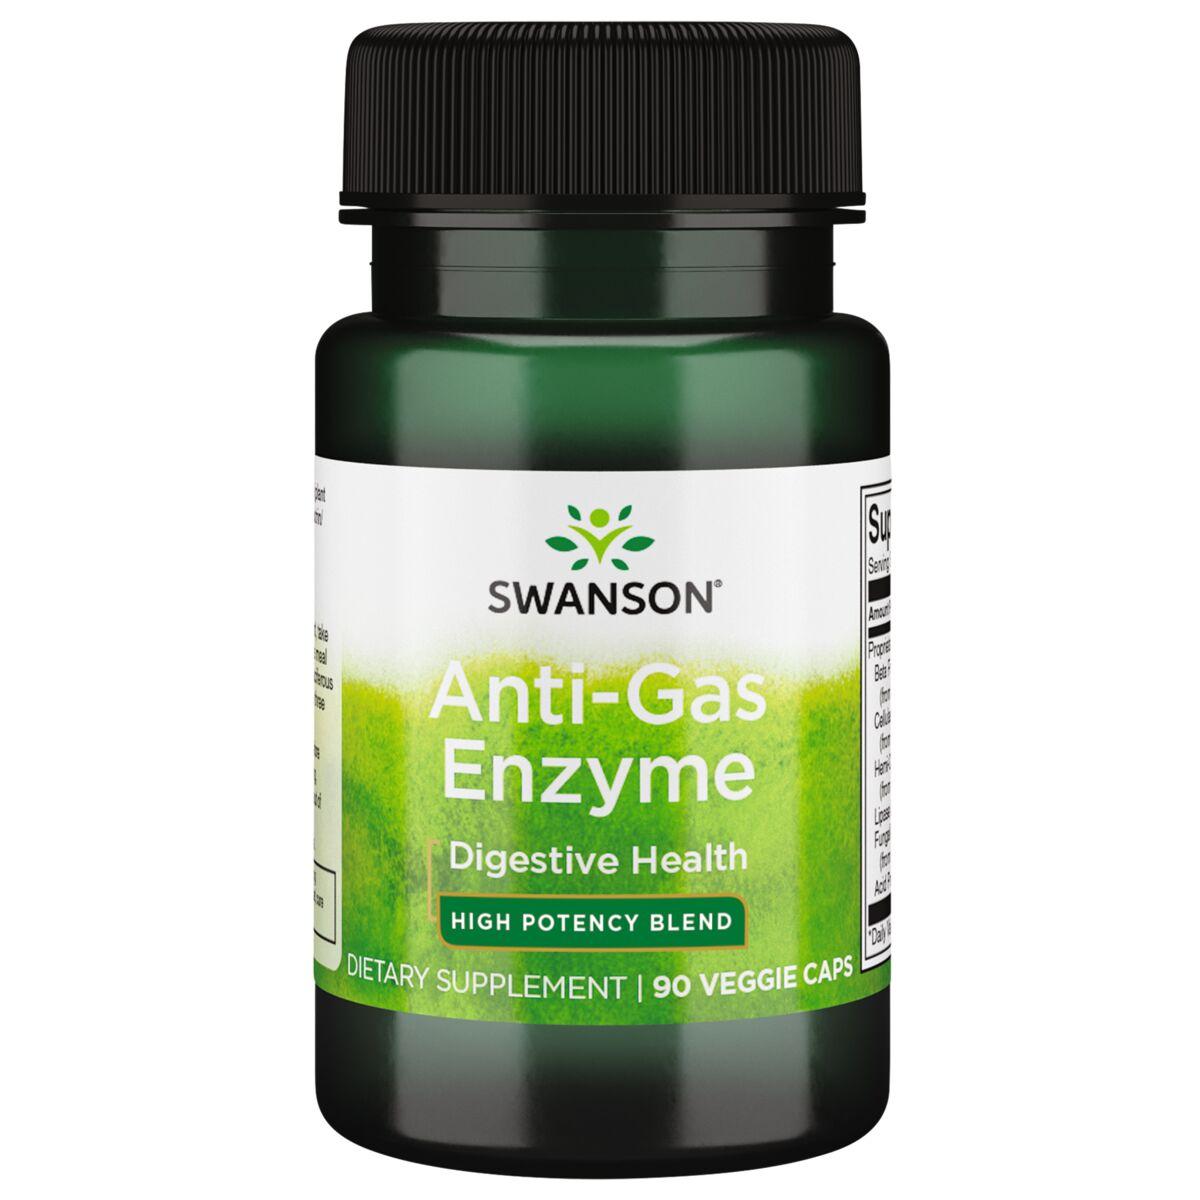 Swanson Ultra Anti-Gas Enzyme - High Potency Blend Supplement Vitamin | 40 mg | 90 Veg Caps